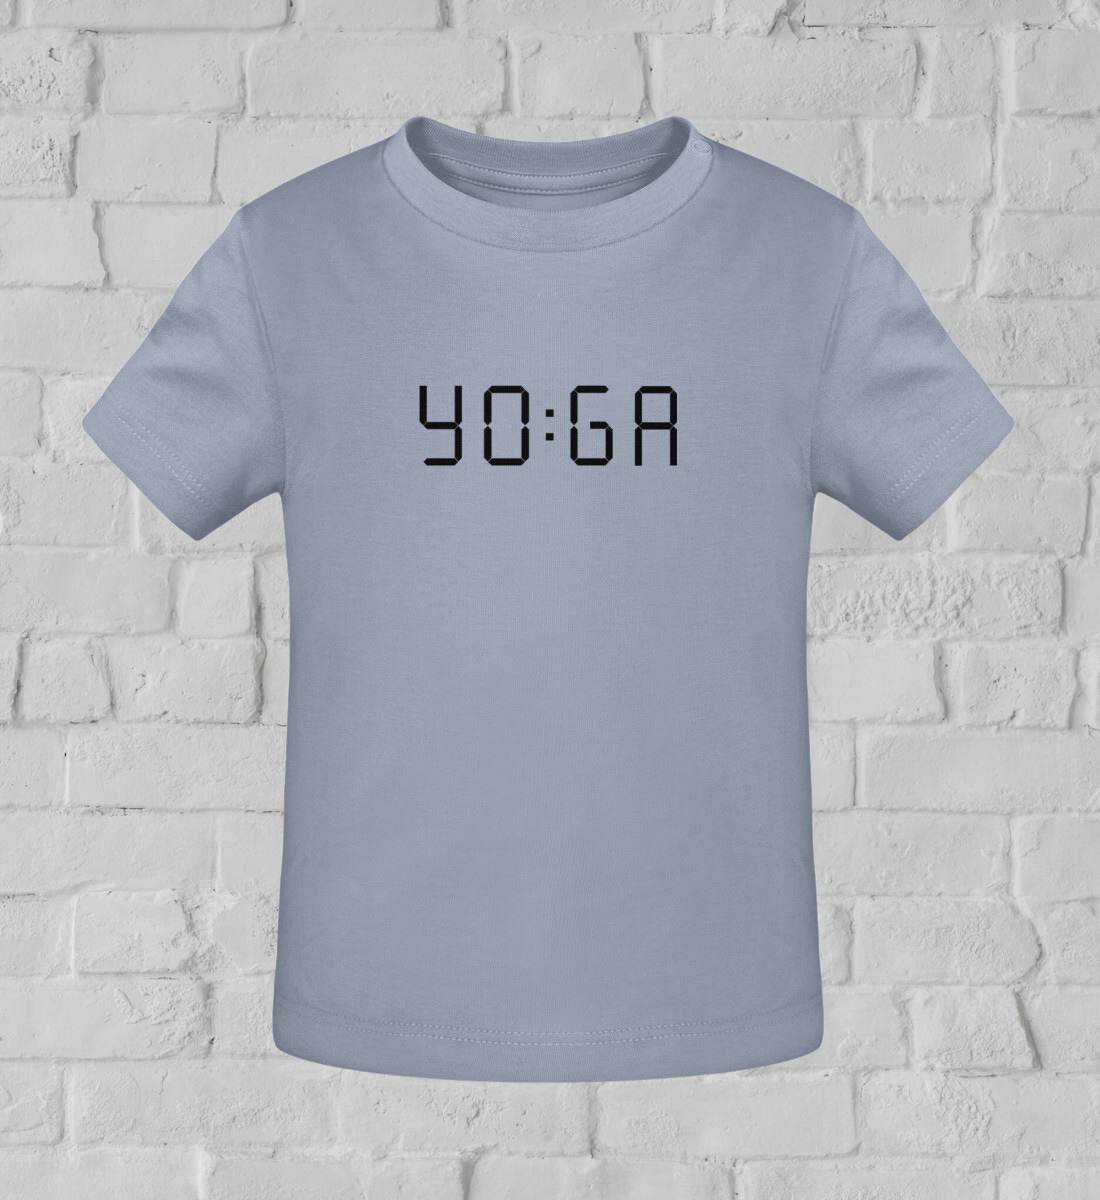 zeit für yoga l yoga shirt kinder mittelblau l yoga kleidung kinder l nachhaltige mode für kinder l vegane kinder mode